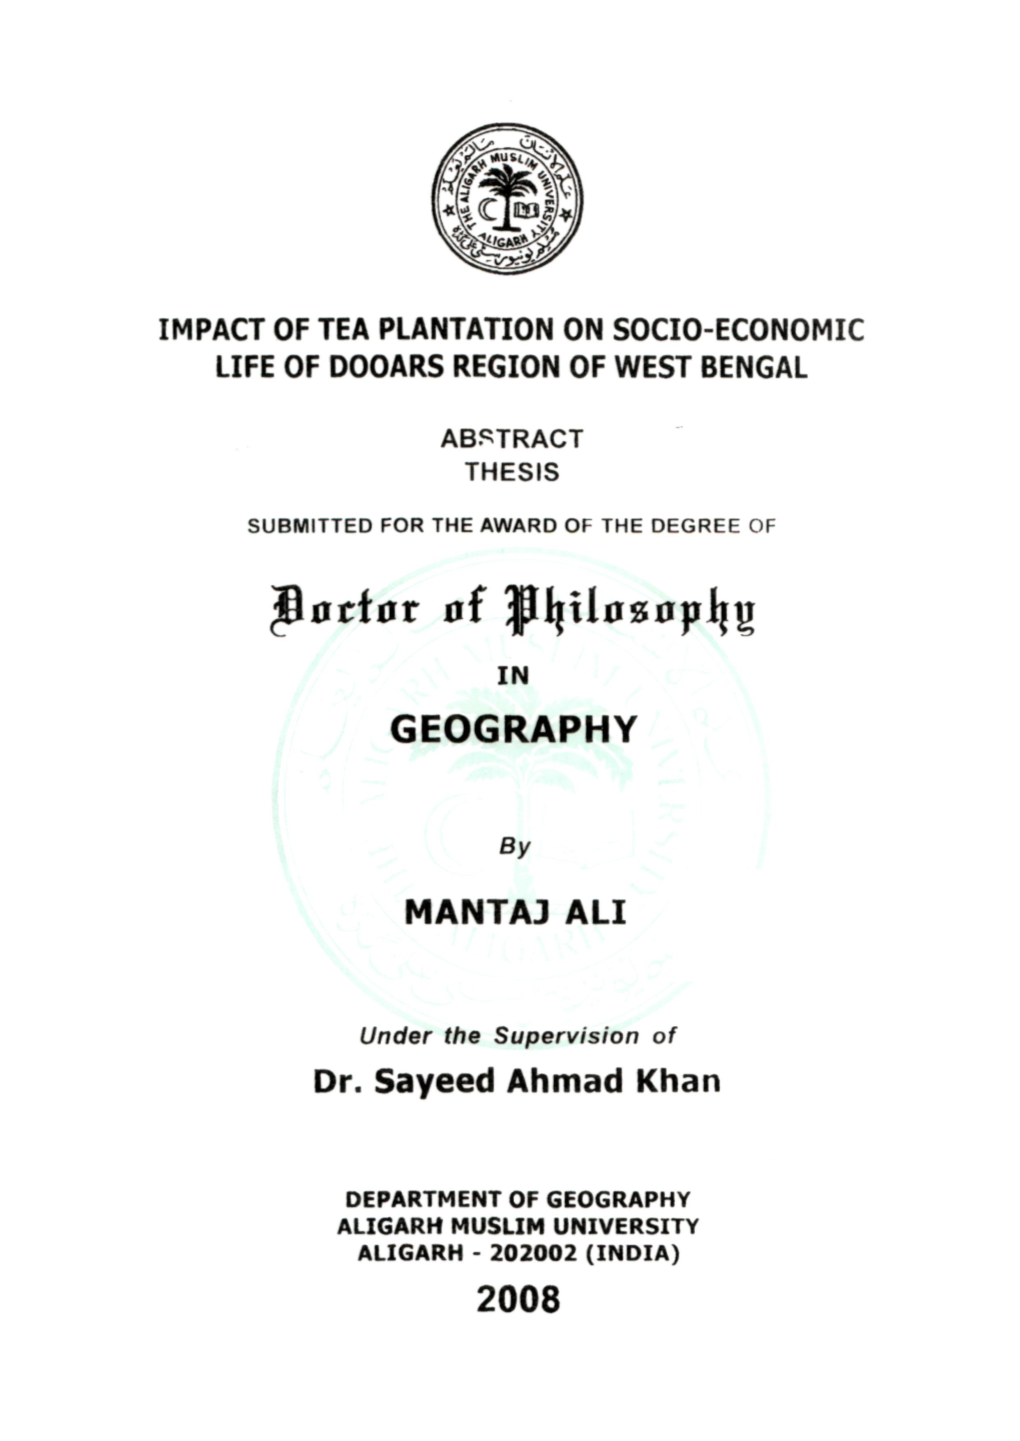 Geography Mantaj Ali 2008